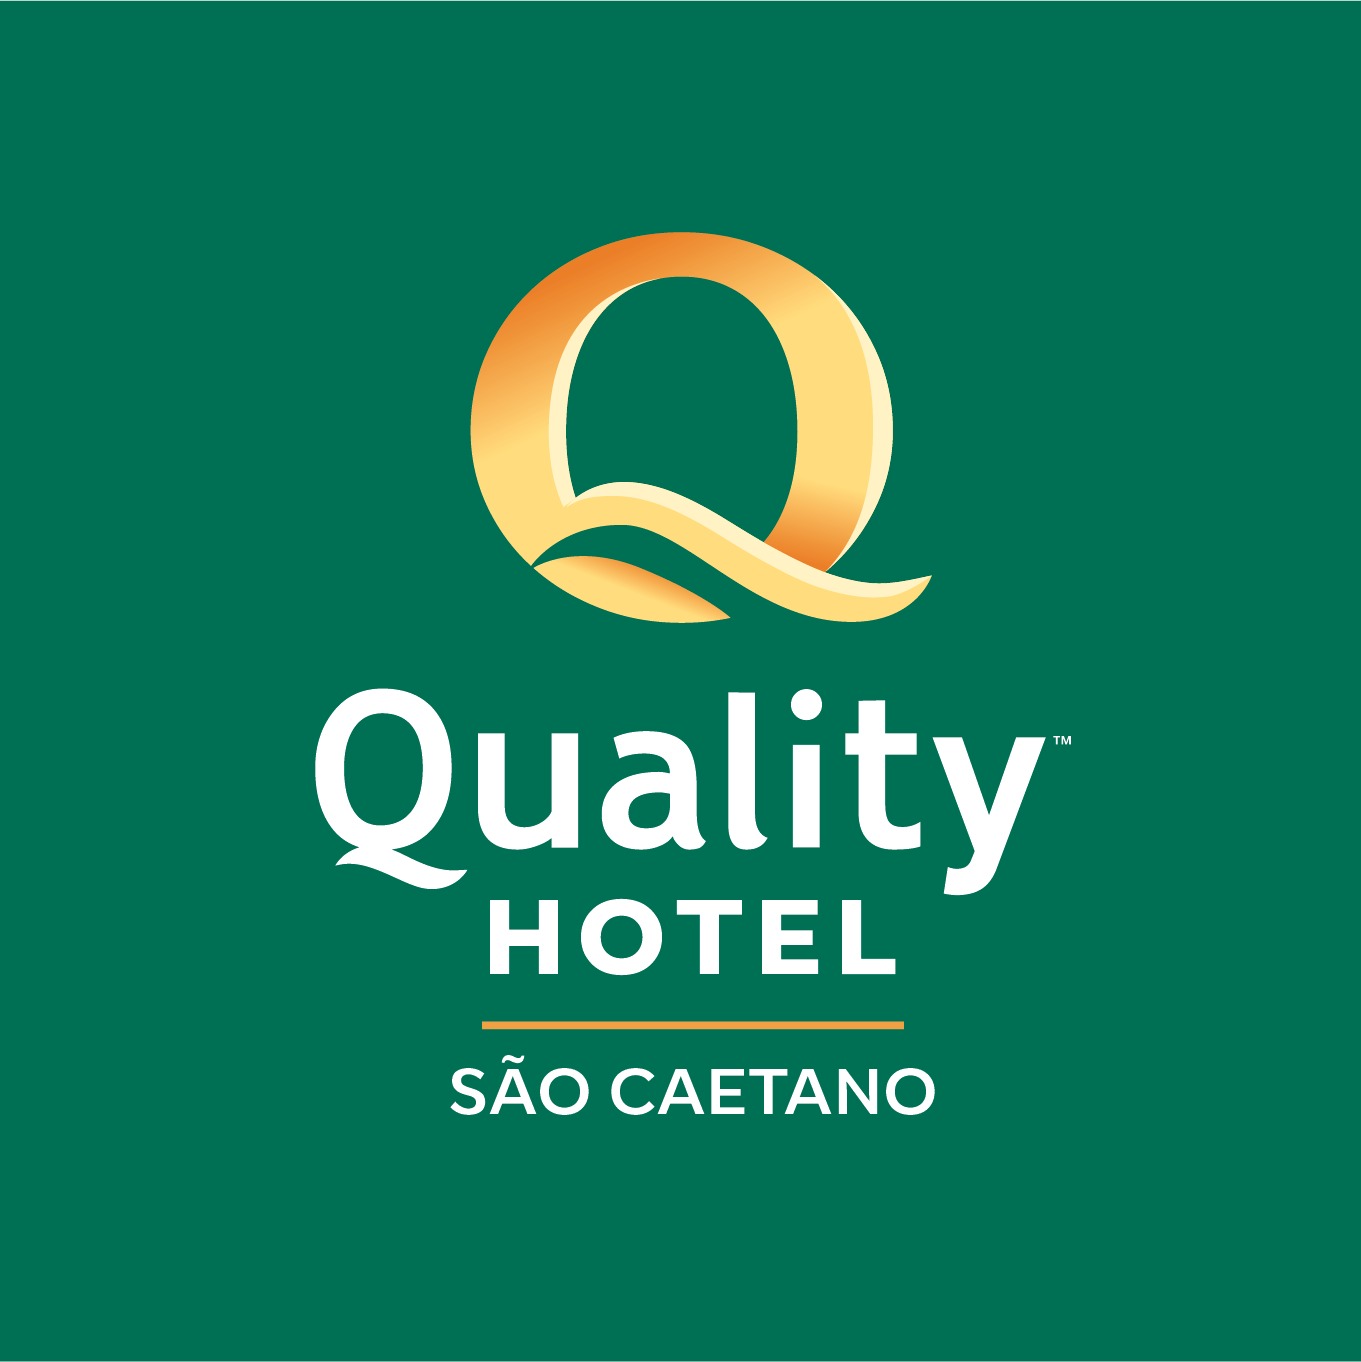 Quality Hotel São Caetano – 45ª HOME & GIFT TÊXTIL & HOME